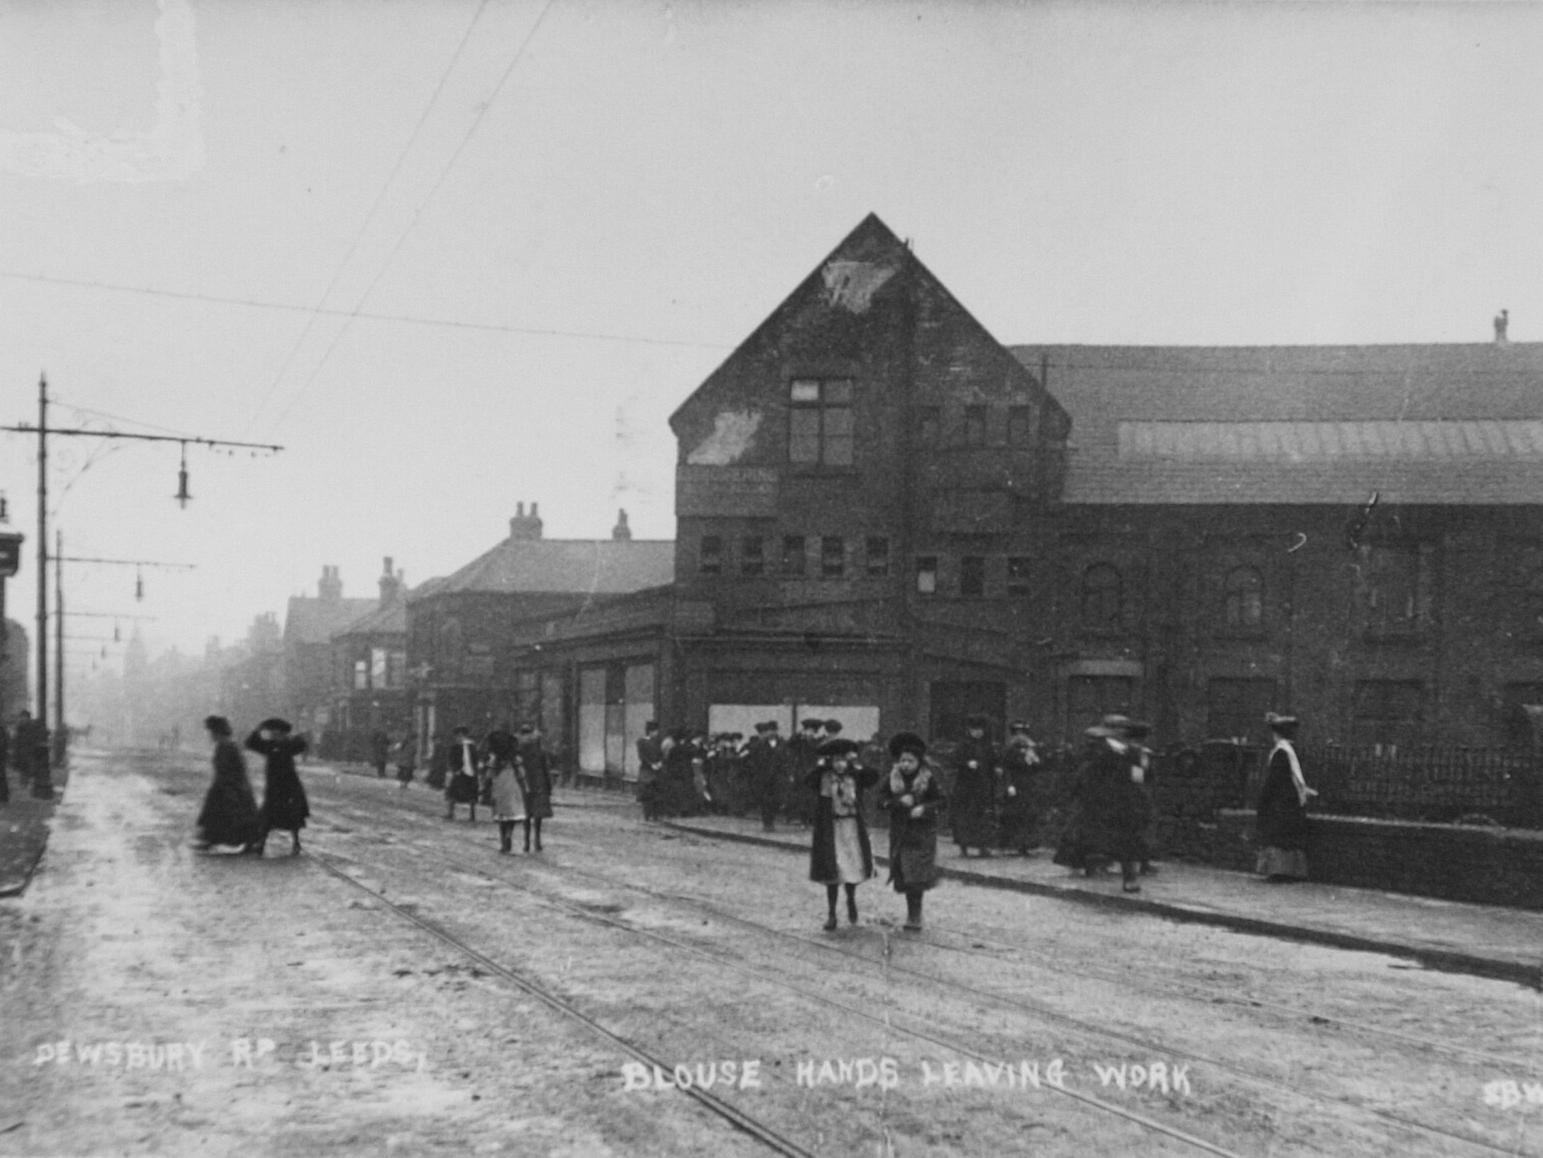 Blouse hands leaving work on Dewsbury Road, pre-first world war.